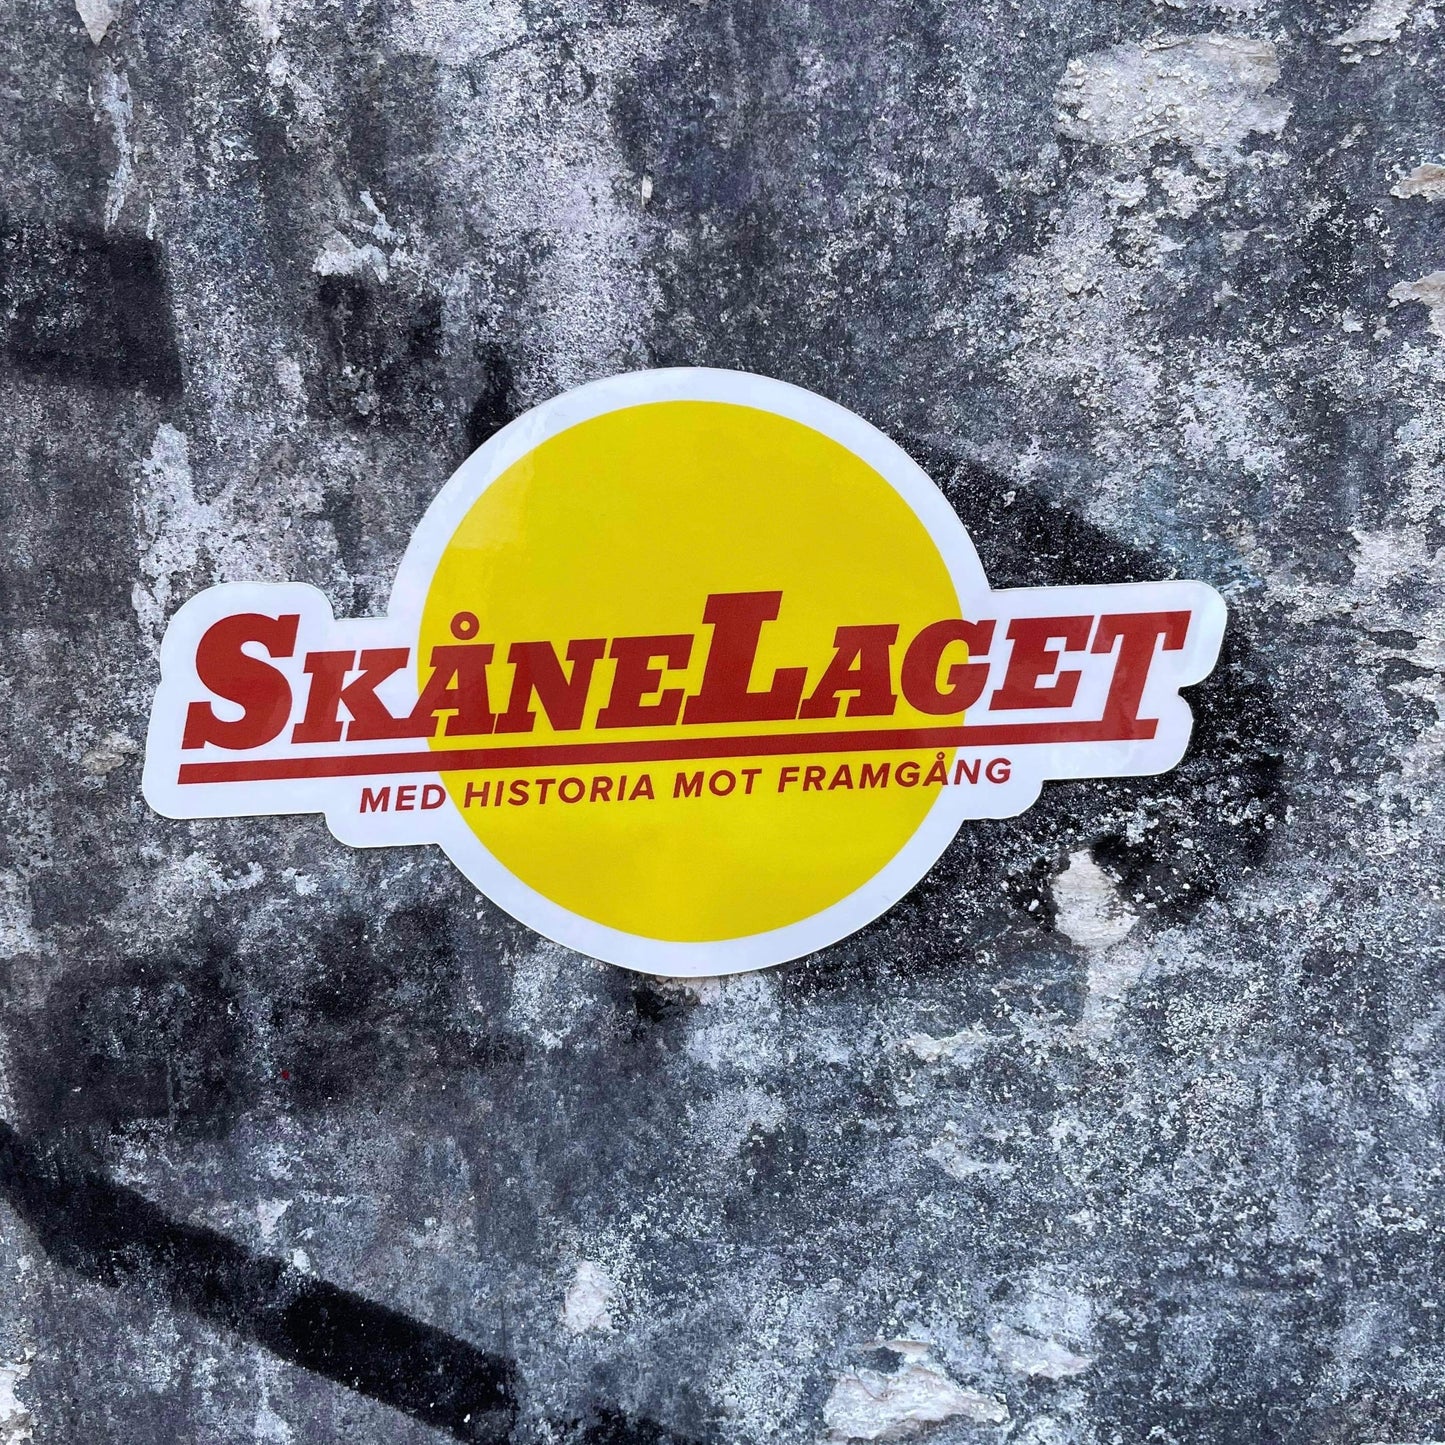 SkåneLaget Profil - 20 st Klibbor